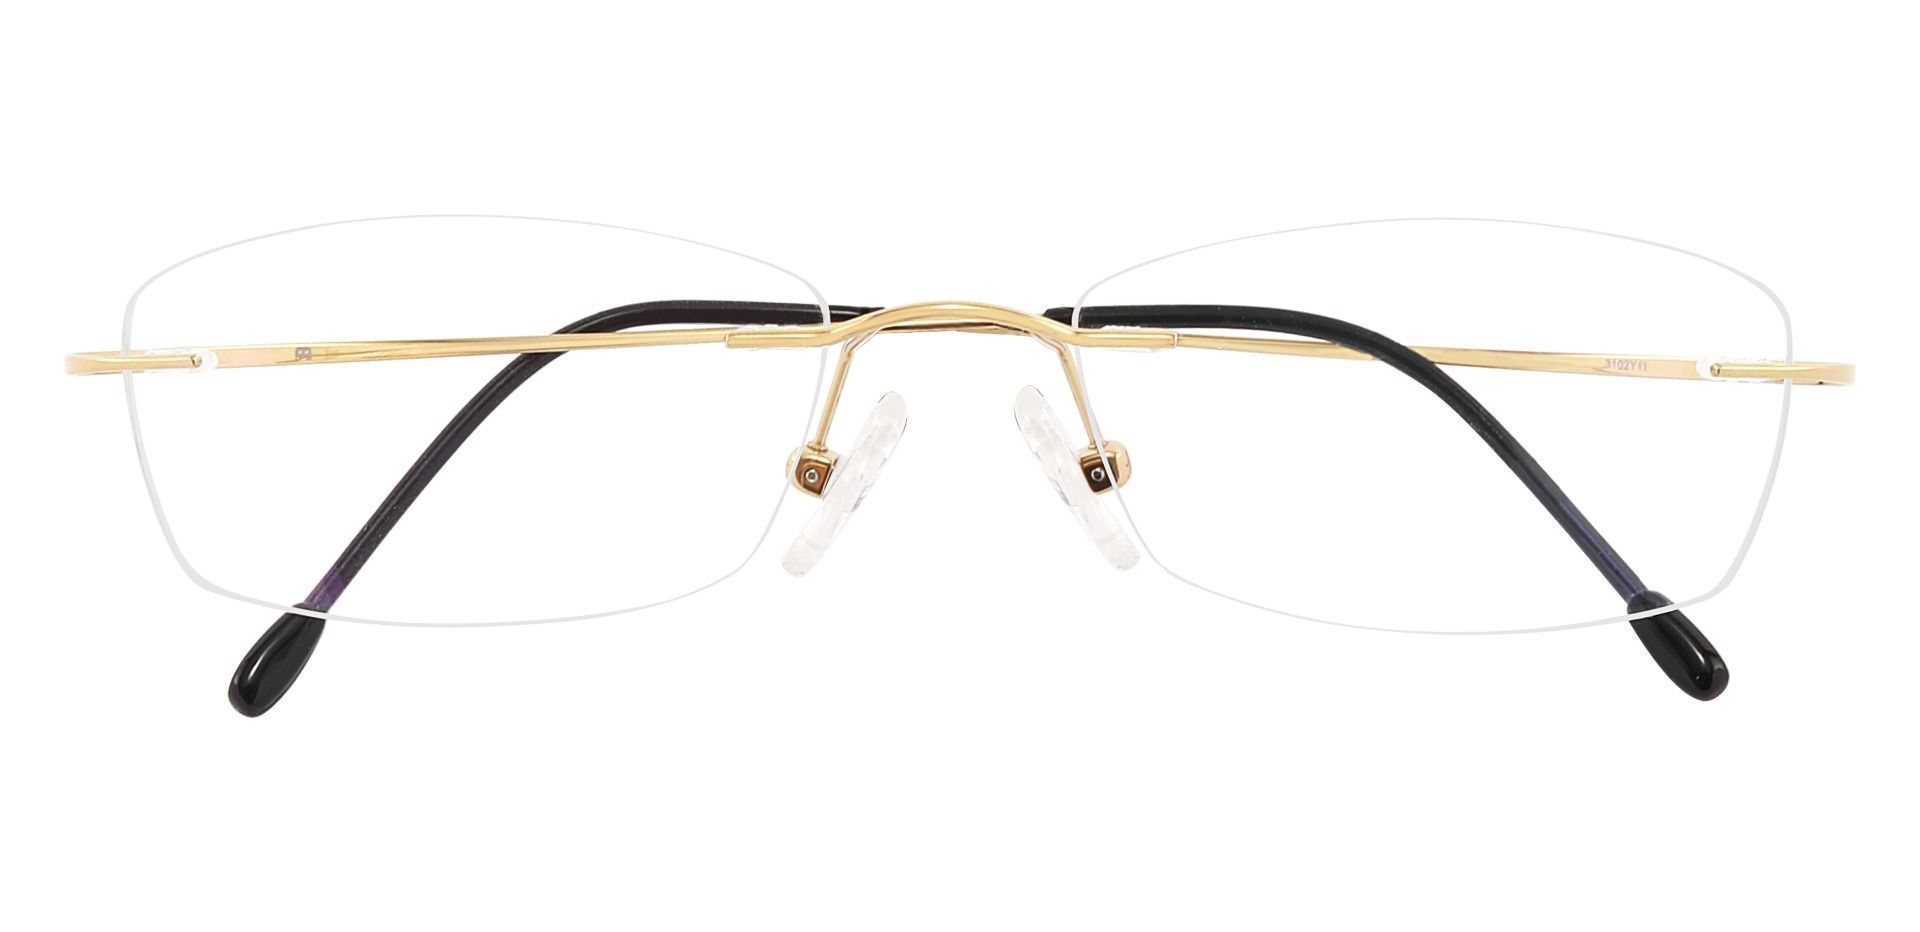 Providence Rimless Single Vision Glasses - Gold